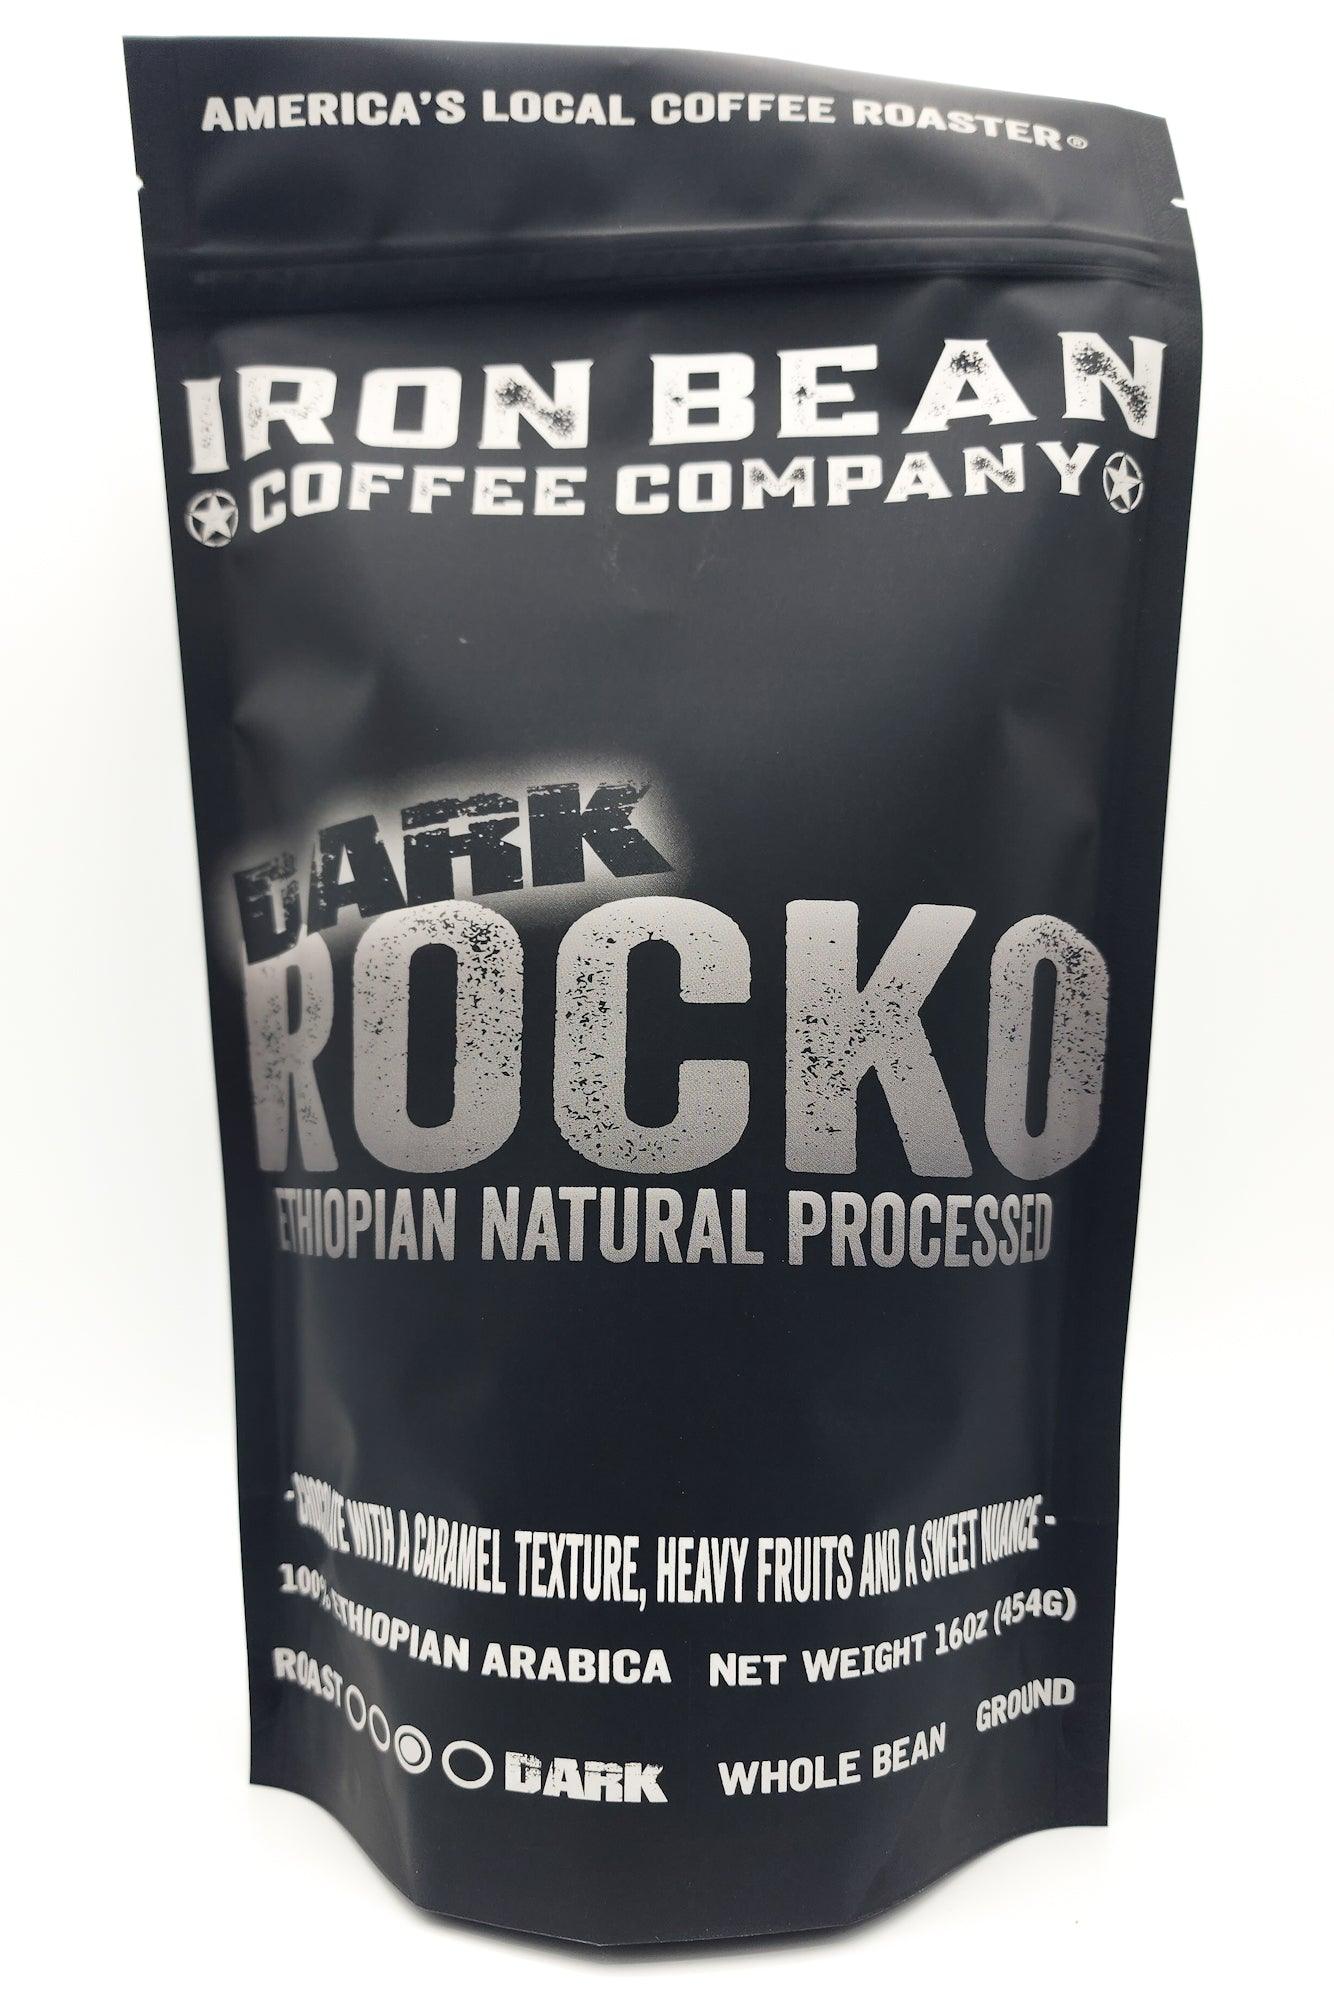 DARK ROCKO - Ethiopian Natural Process - Darker Roast - Iron Bean Coffee Company